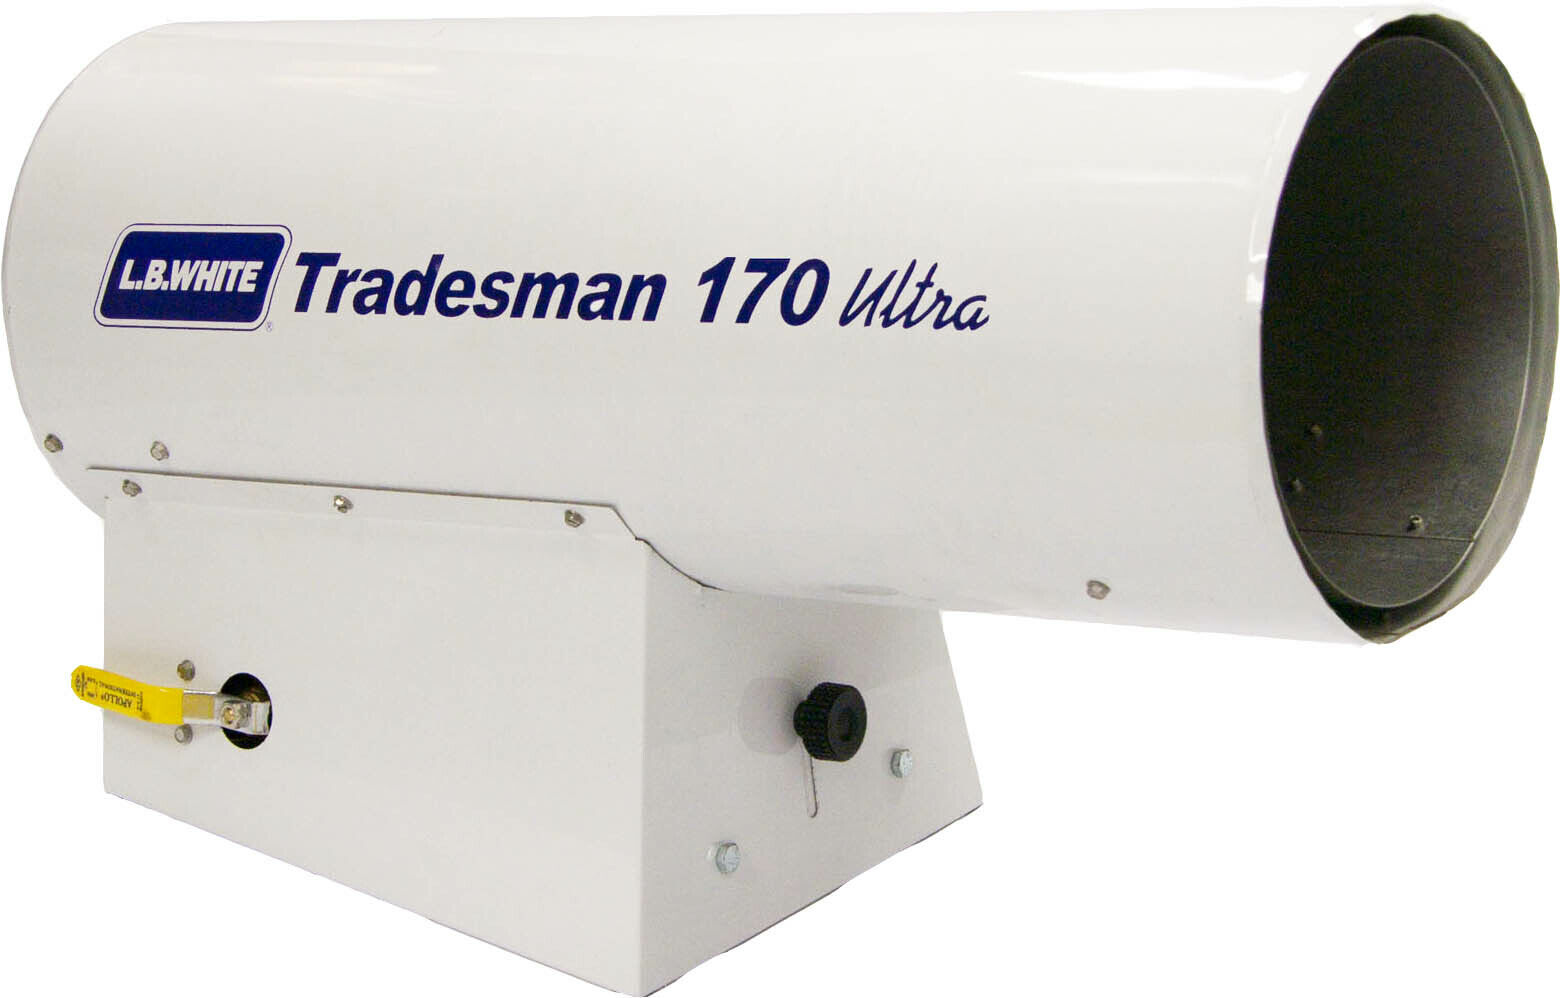 LB White Tradesman 170N Ultra Heater 125,000-170,000 BTUH, NG-w/Diagnostic Light